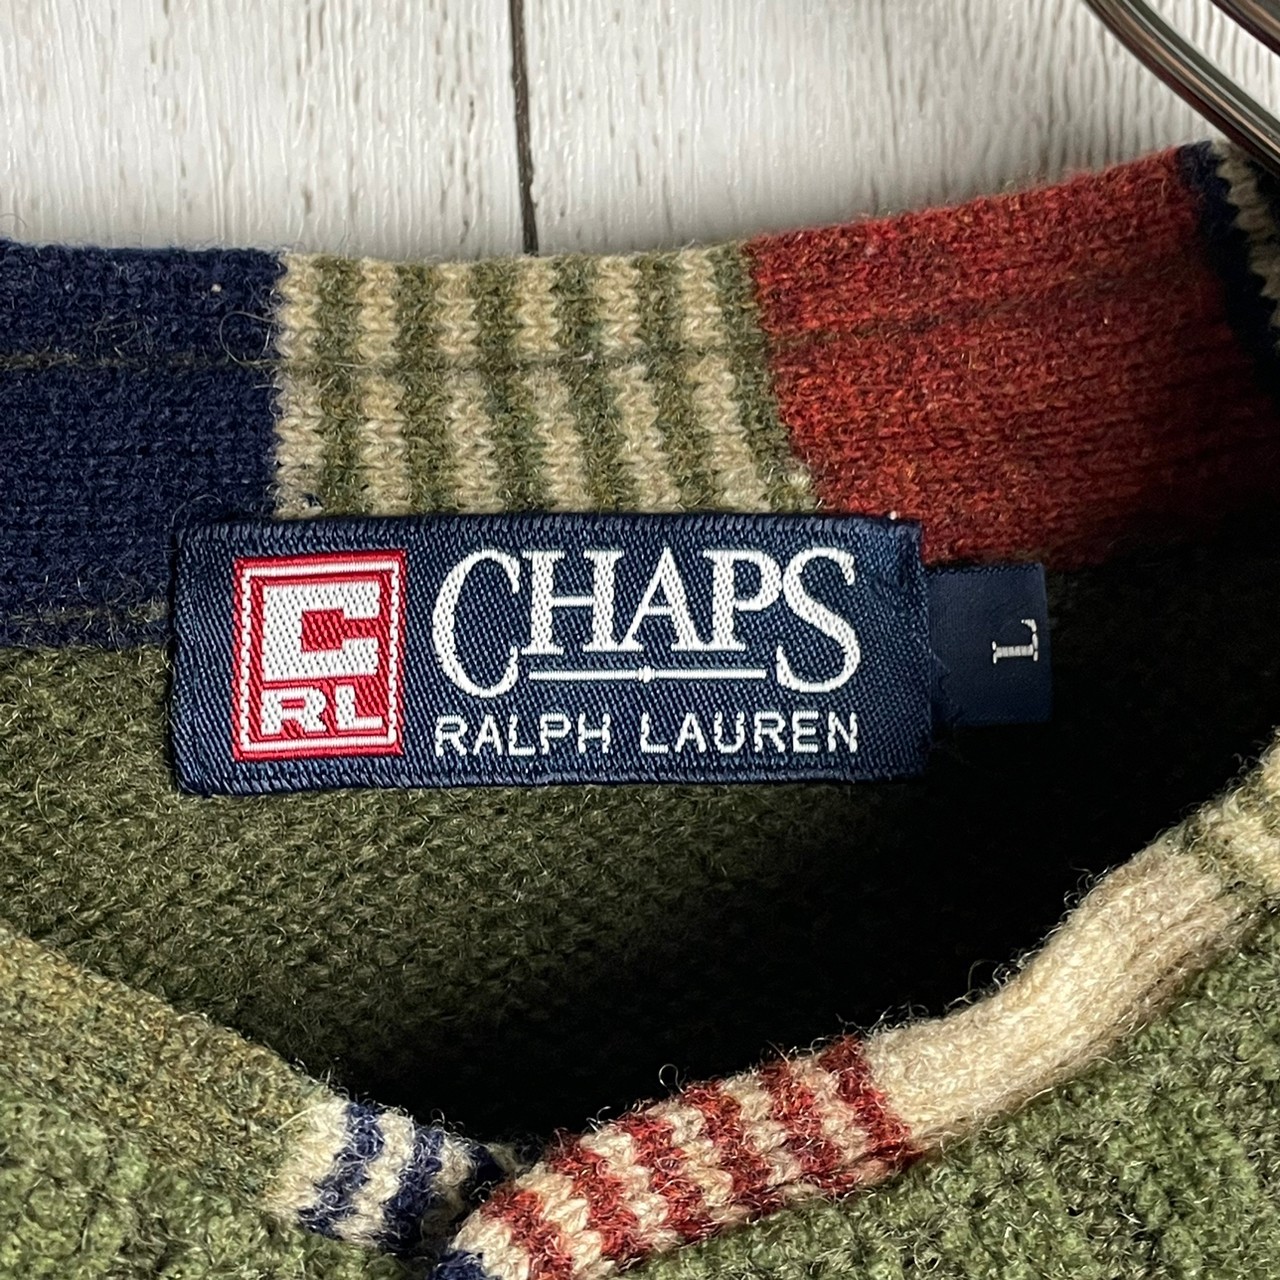 CHPAS Ralph Lauren   90s ハーフボタン ウールニット